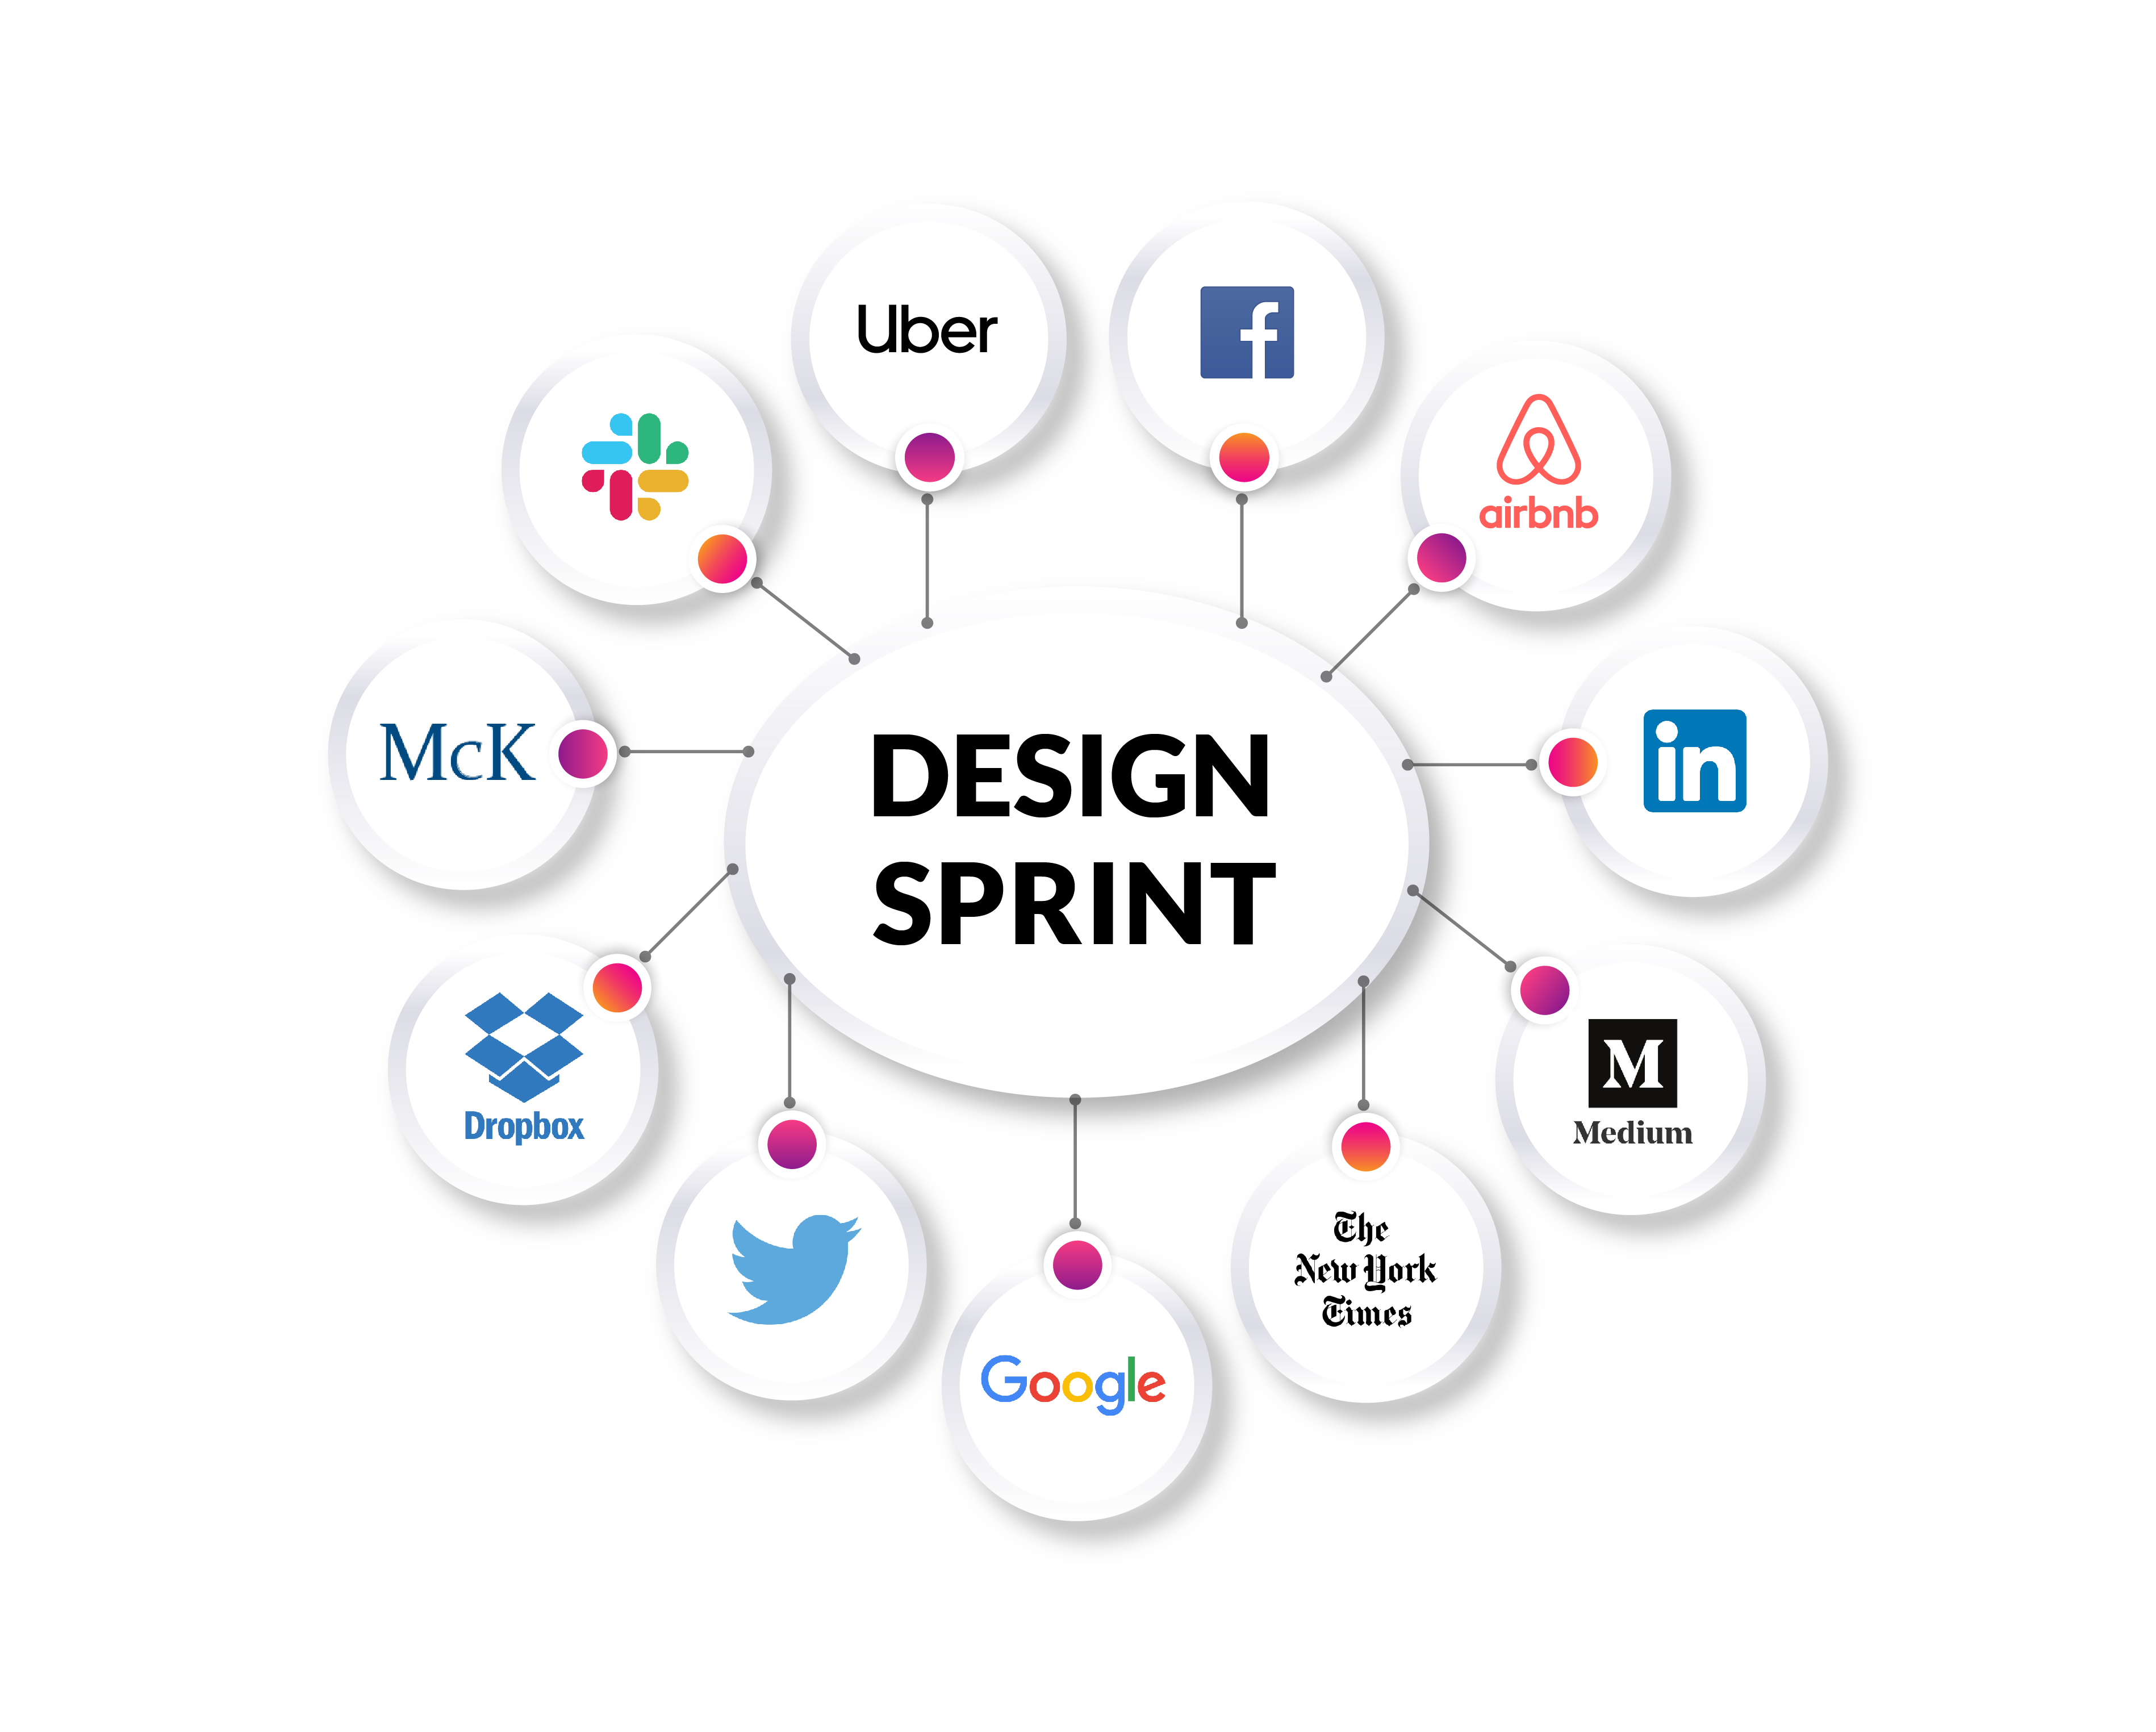 Companies that use design sprints